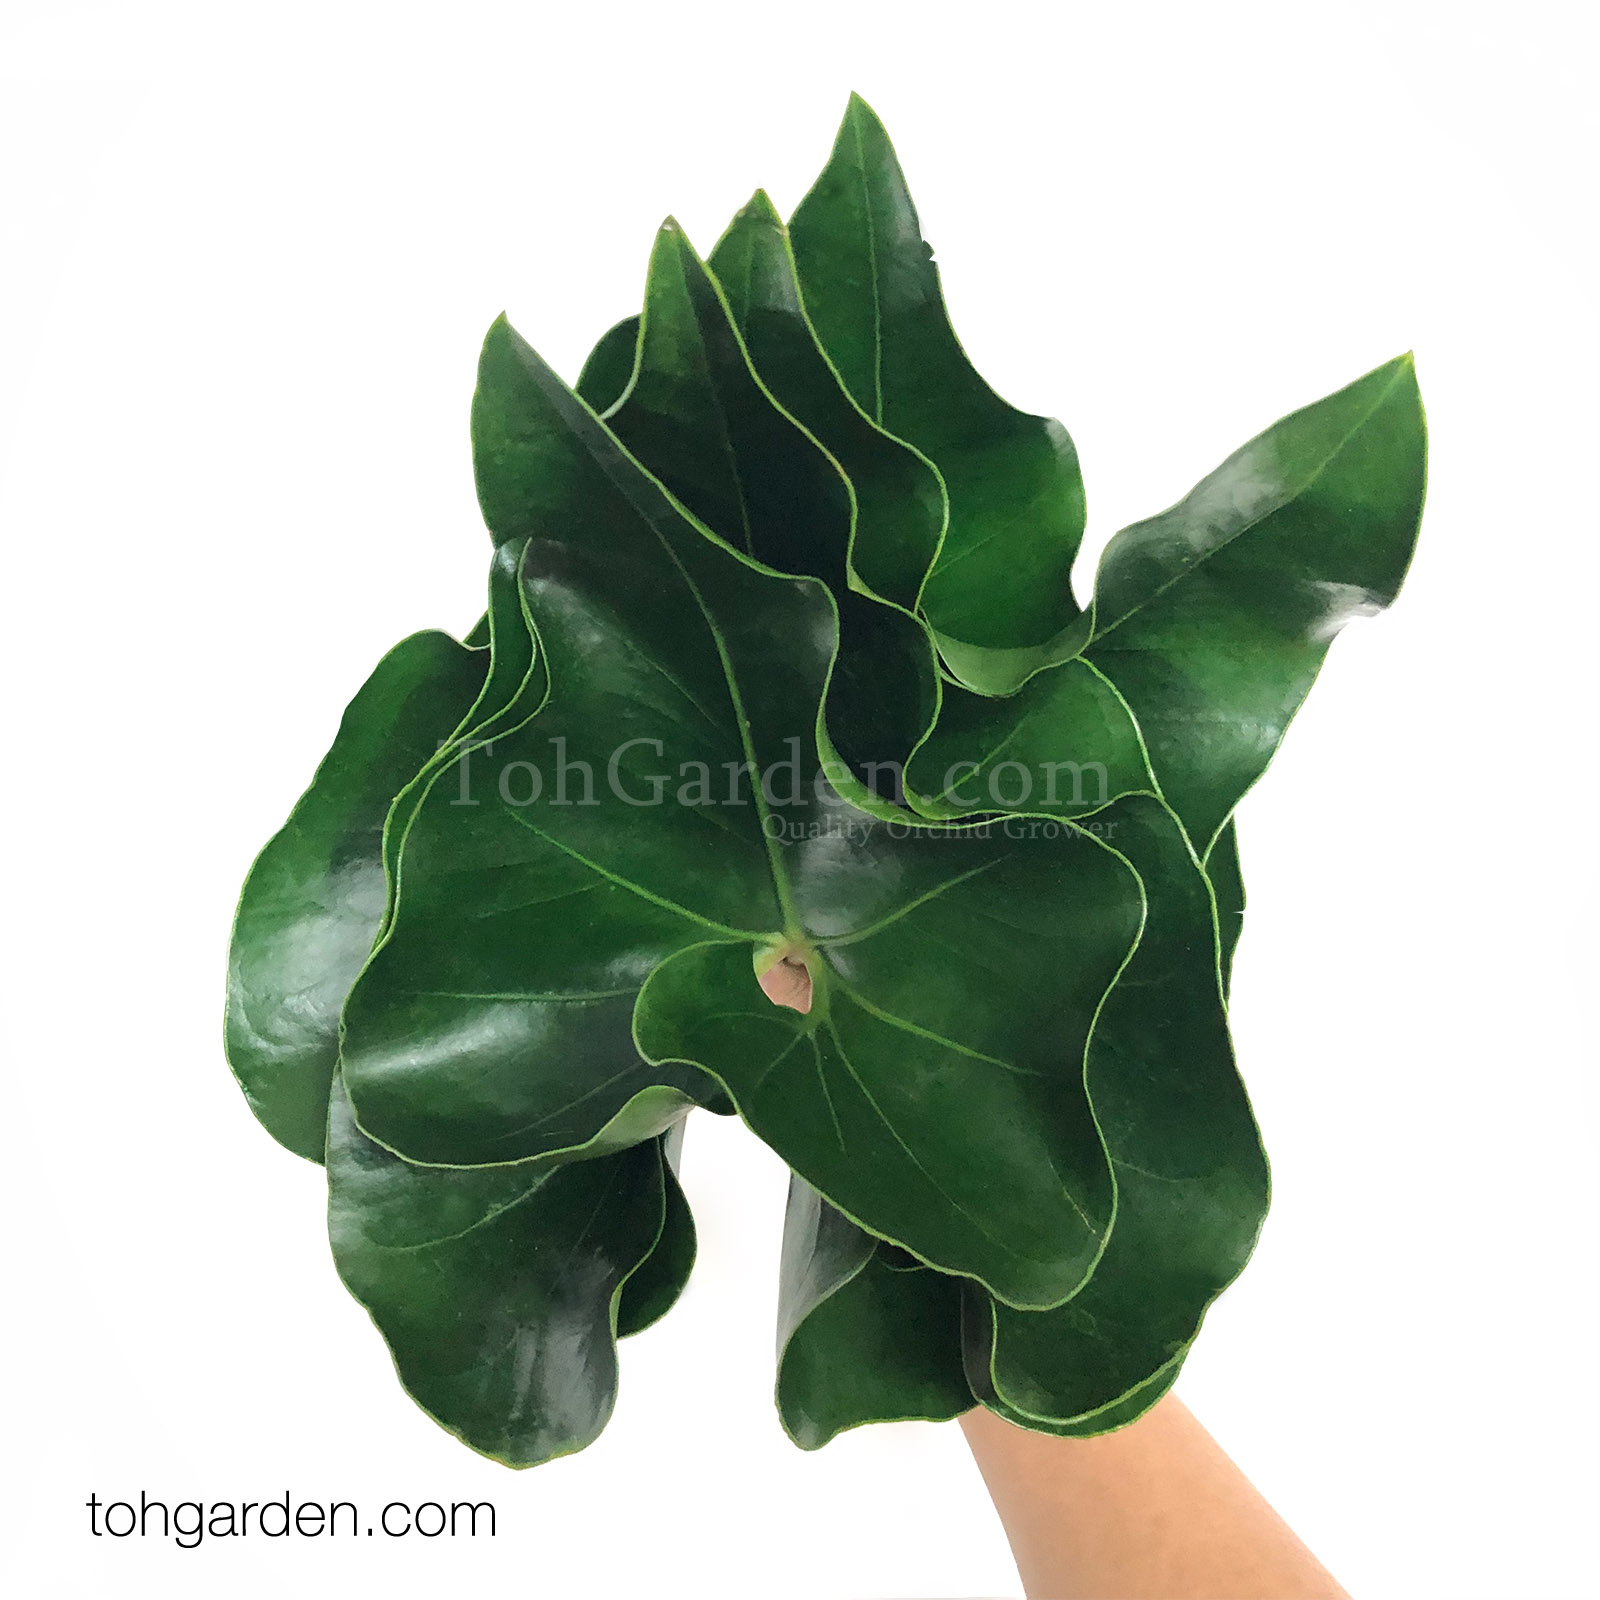 Caladium Green "Arrow Leaf"